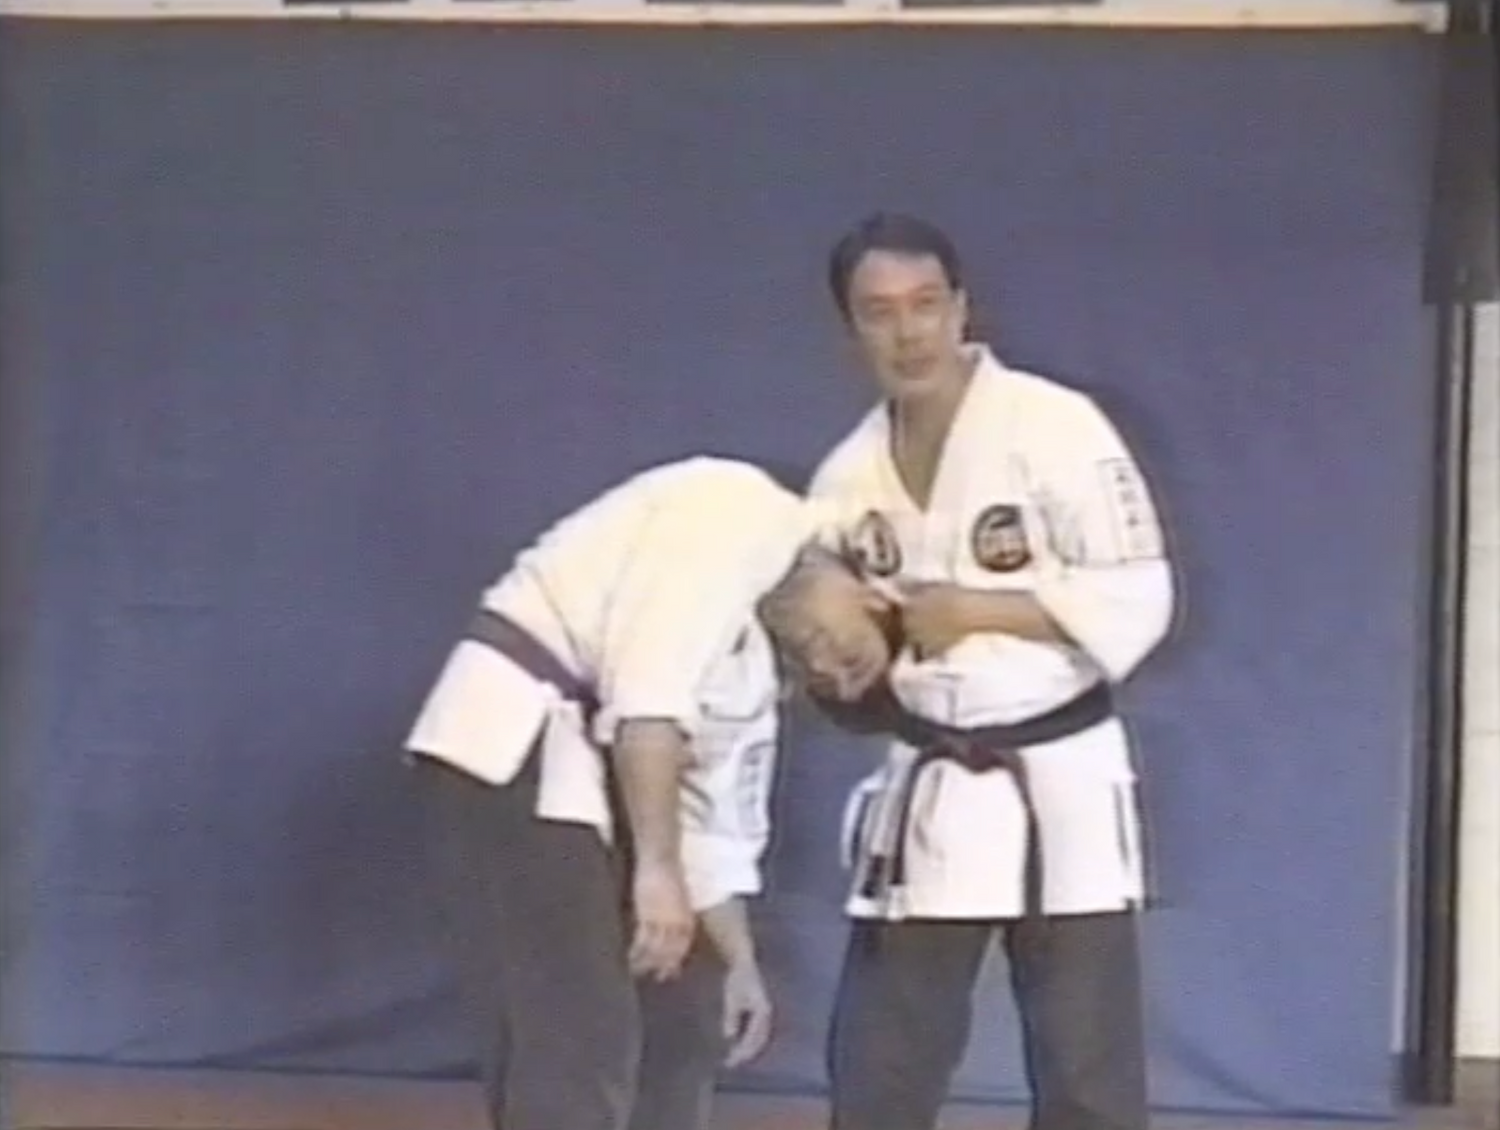 Small Circle Jujitsu: Kyusho Jitsu Connection DVD by Leon Jay - Budovideos Inc